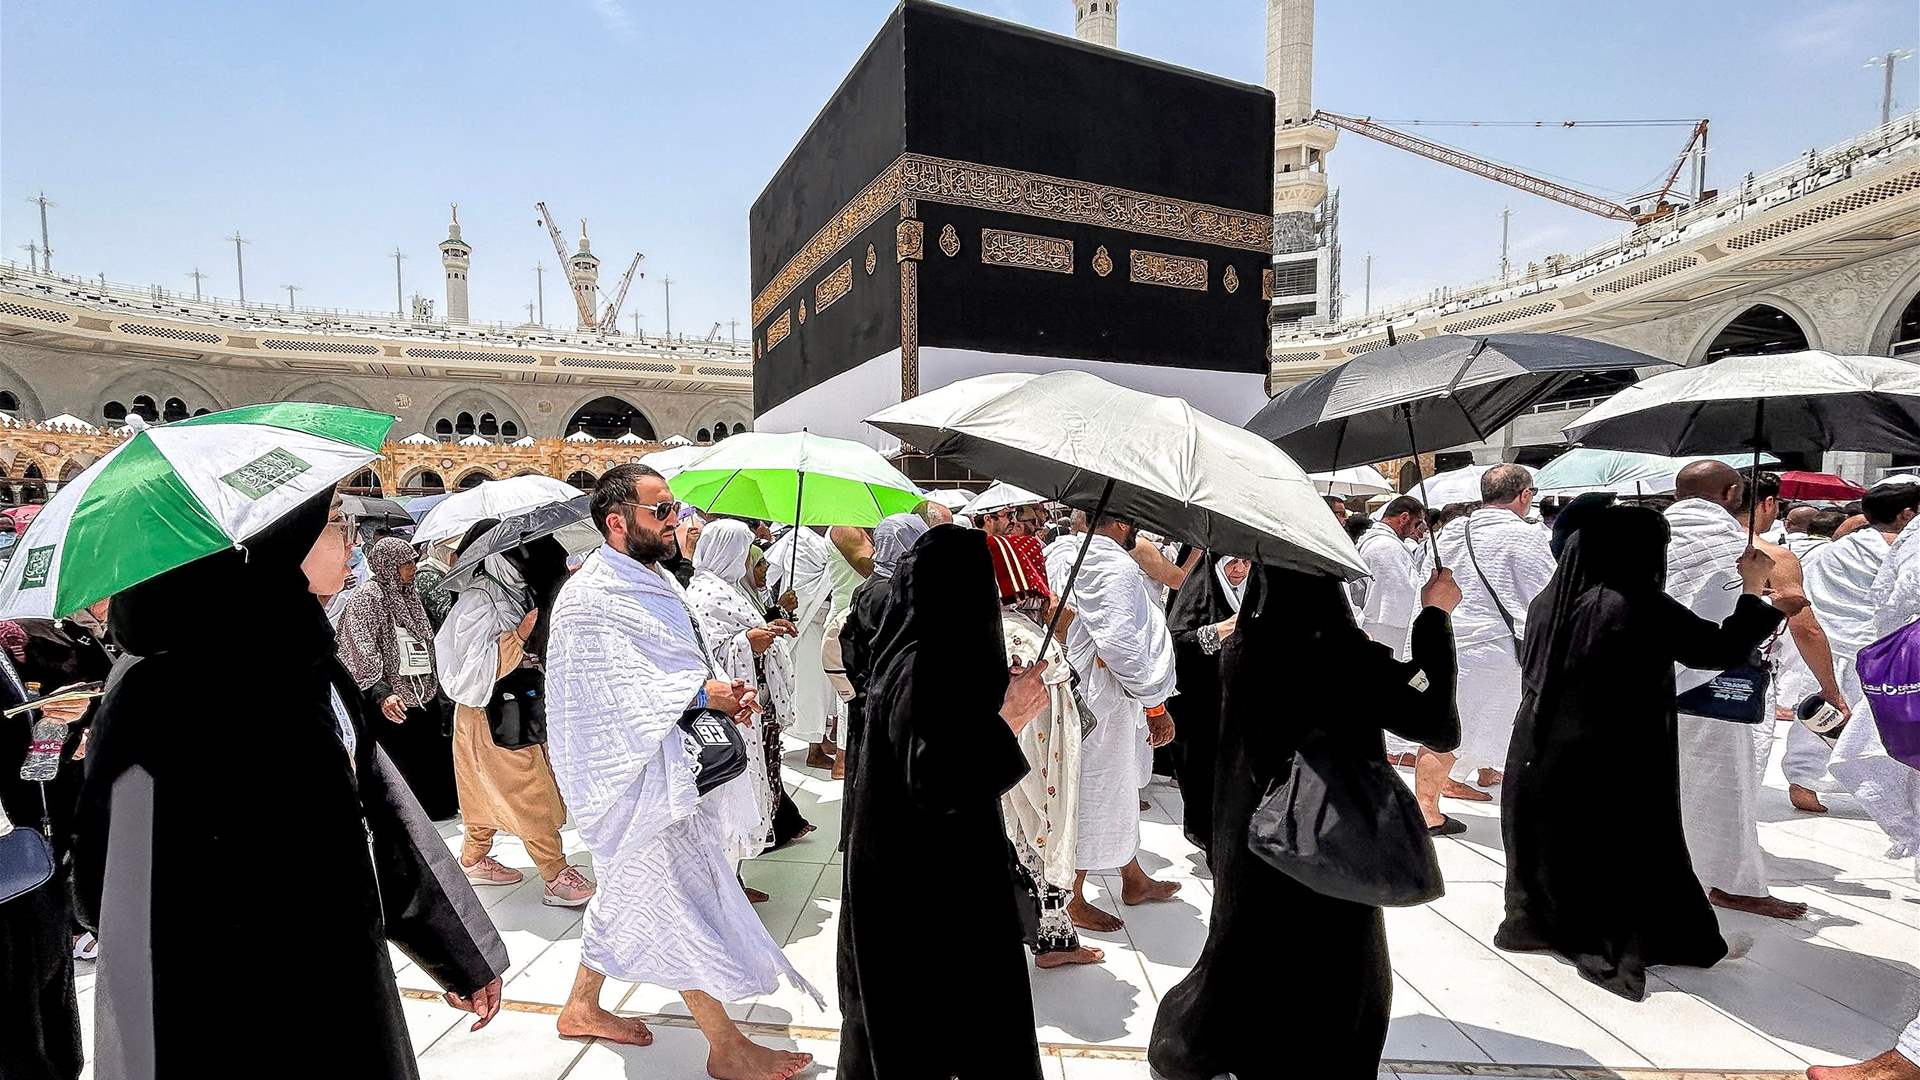 Soaring temperatures scorch pilgrims on Hajj in Saudi Arabia